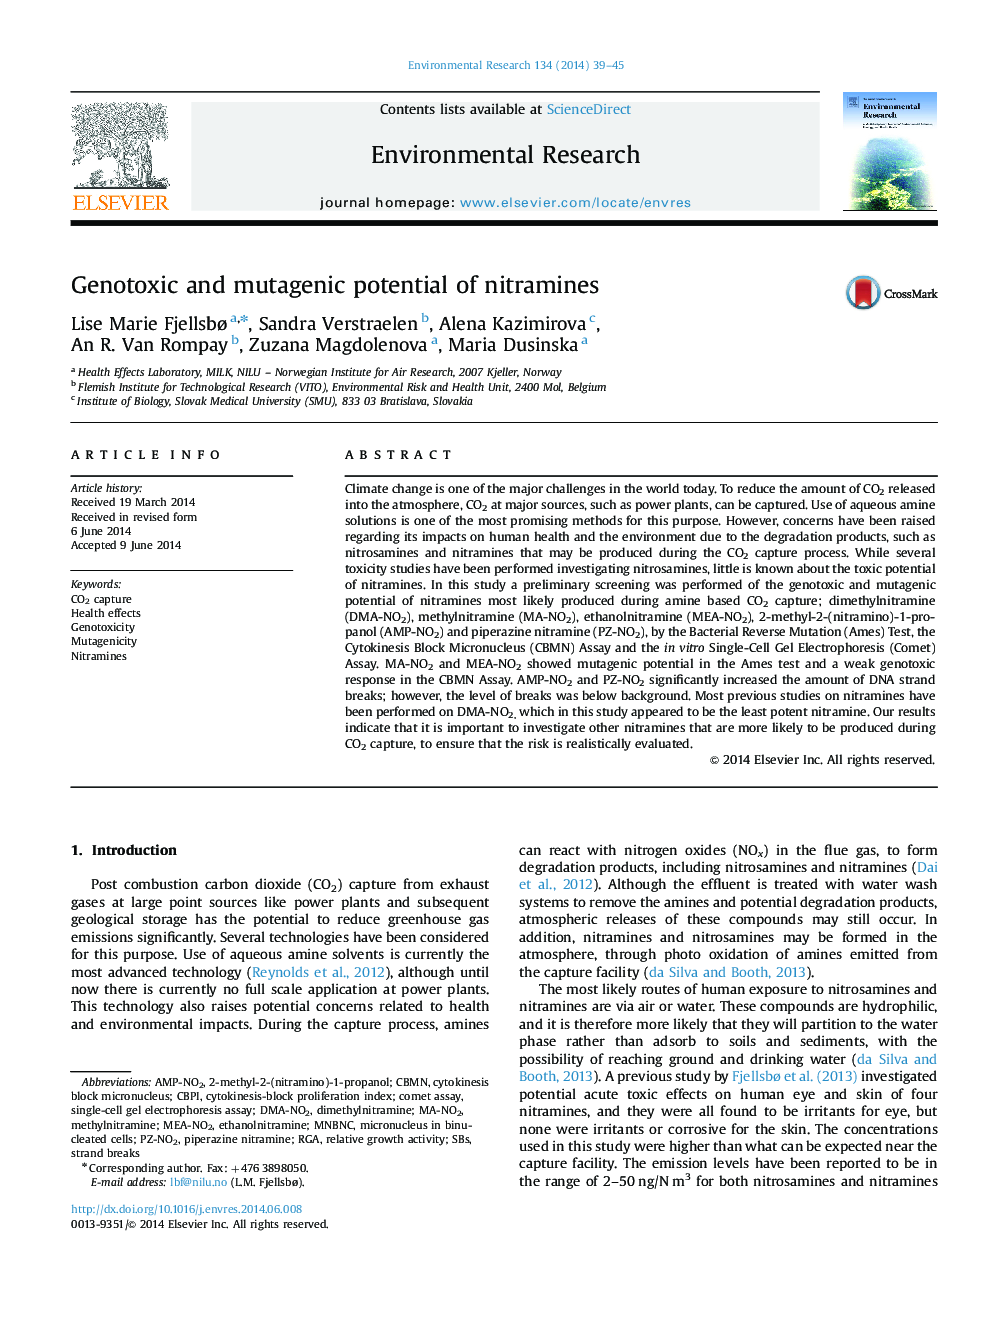 Genotoxic and mutagenic potential of nitramines